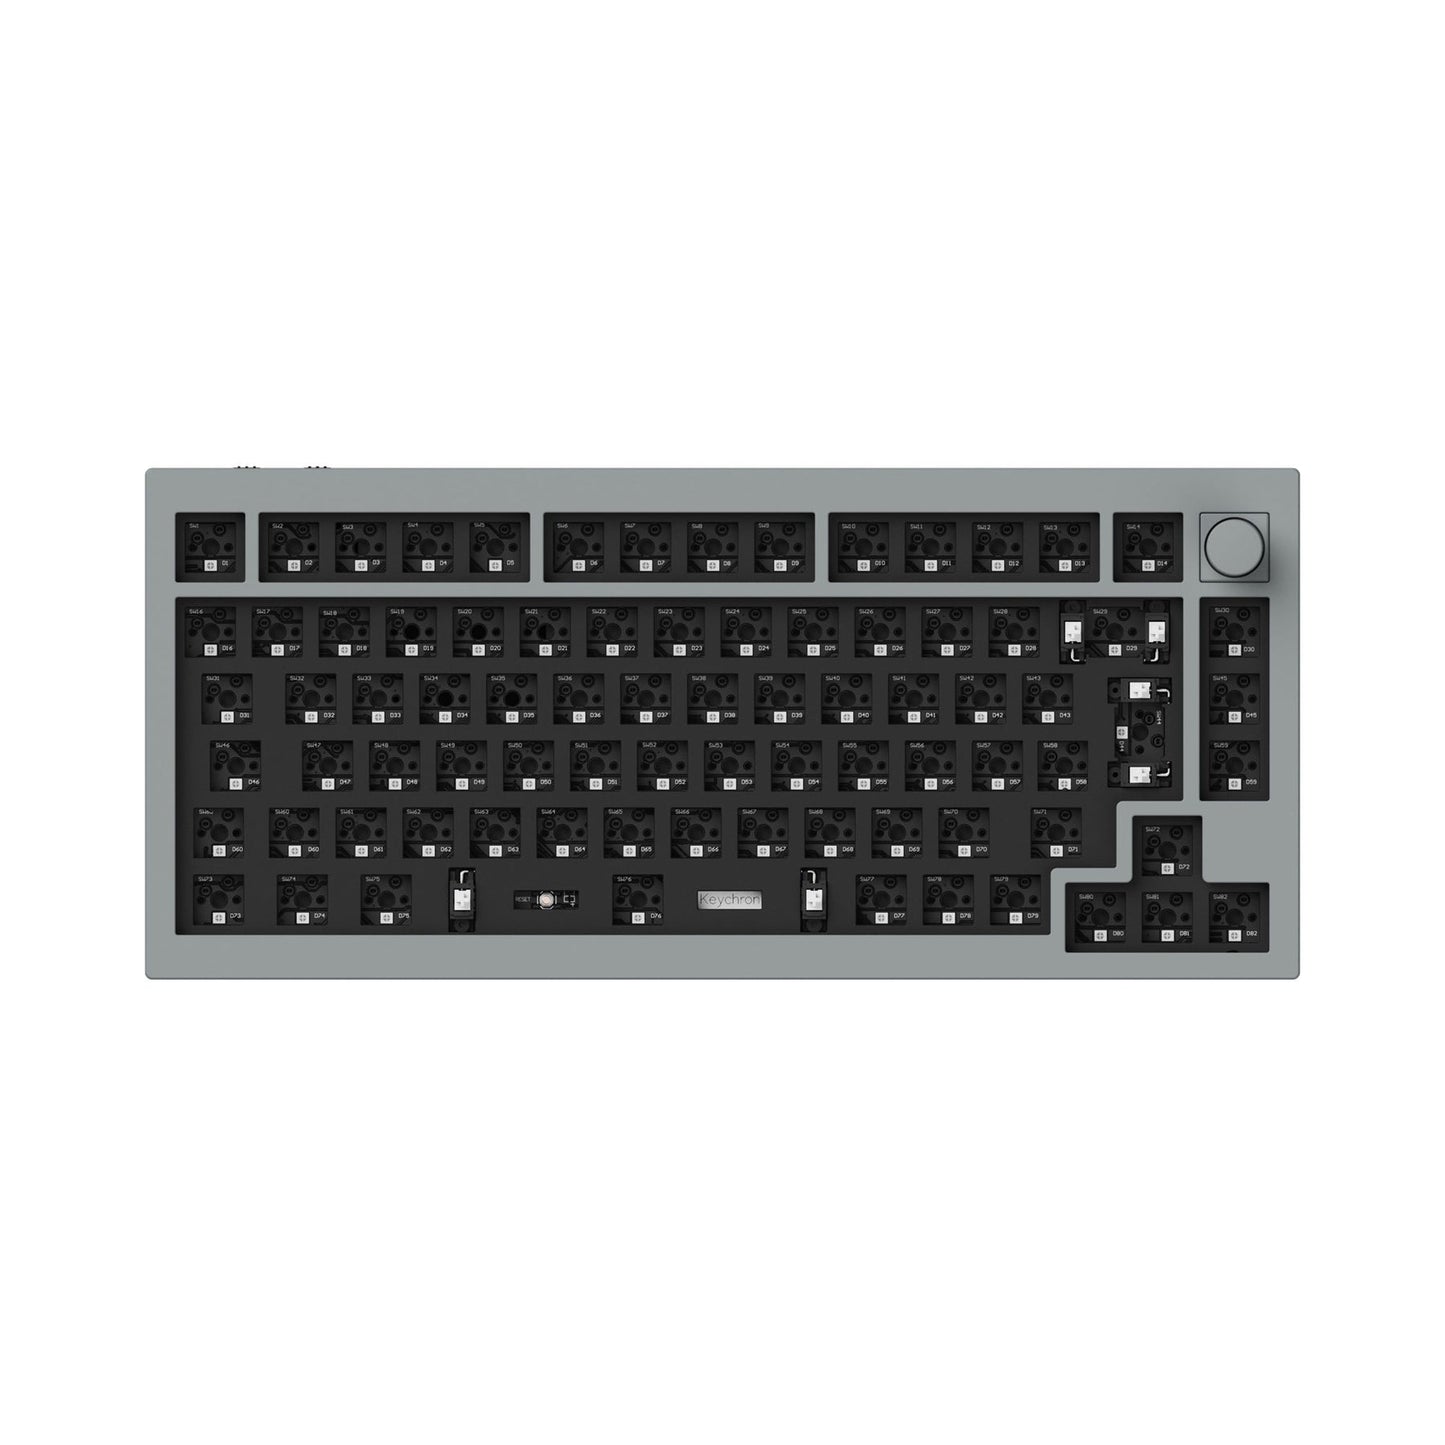 Keychron Q1 Pro QMK Mechanical Keyboard Barebone